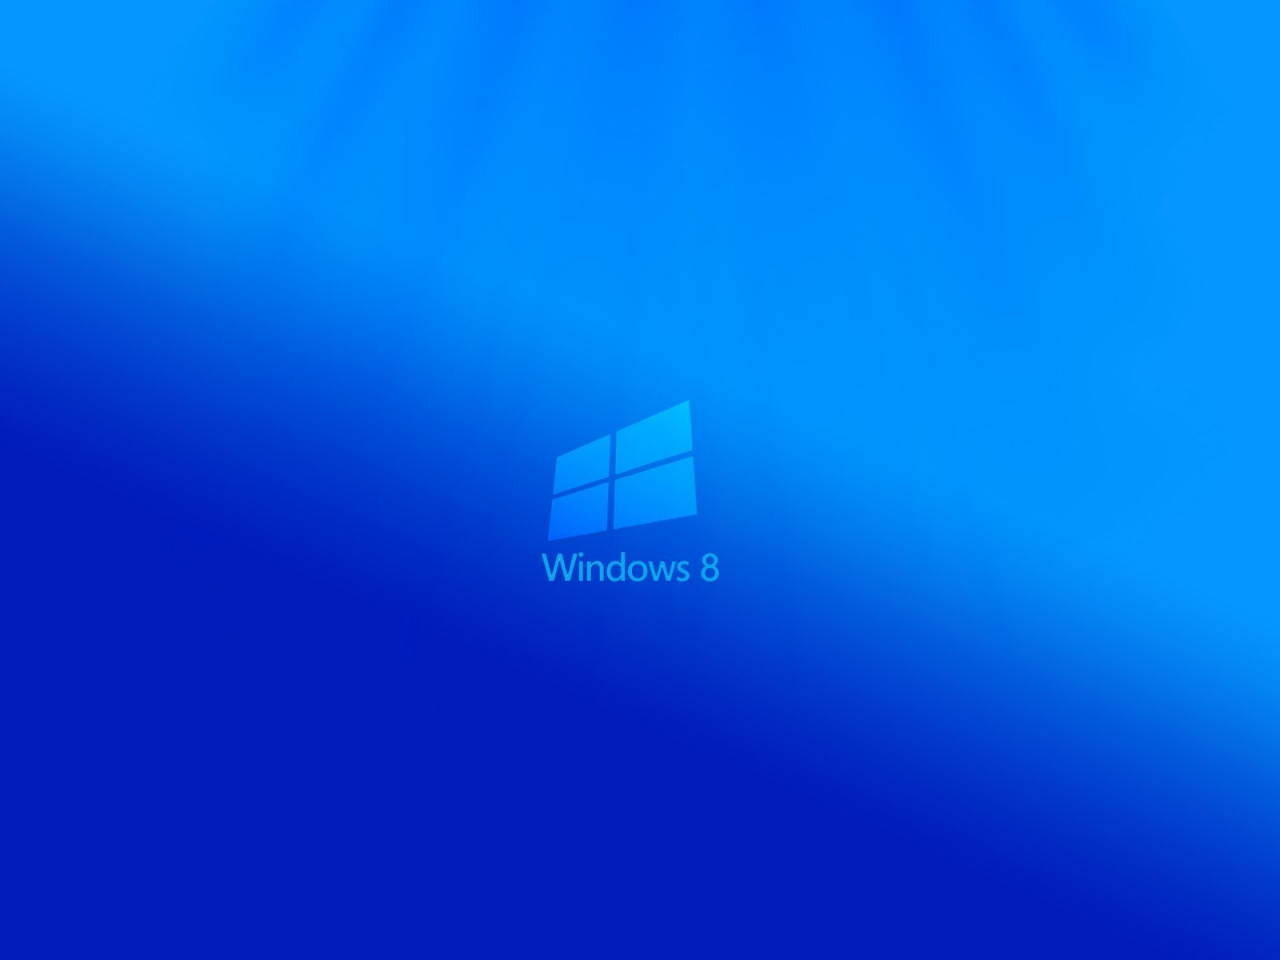 Windows 8 Light for 1280 x 960 resolution